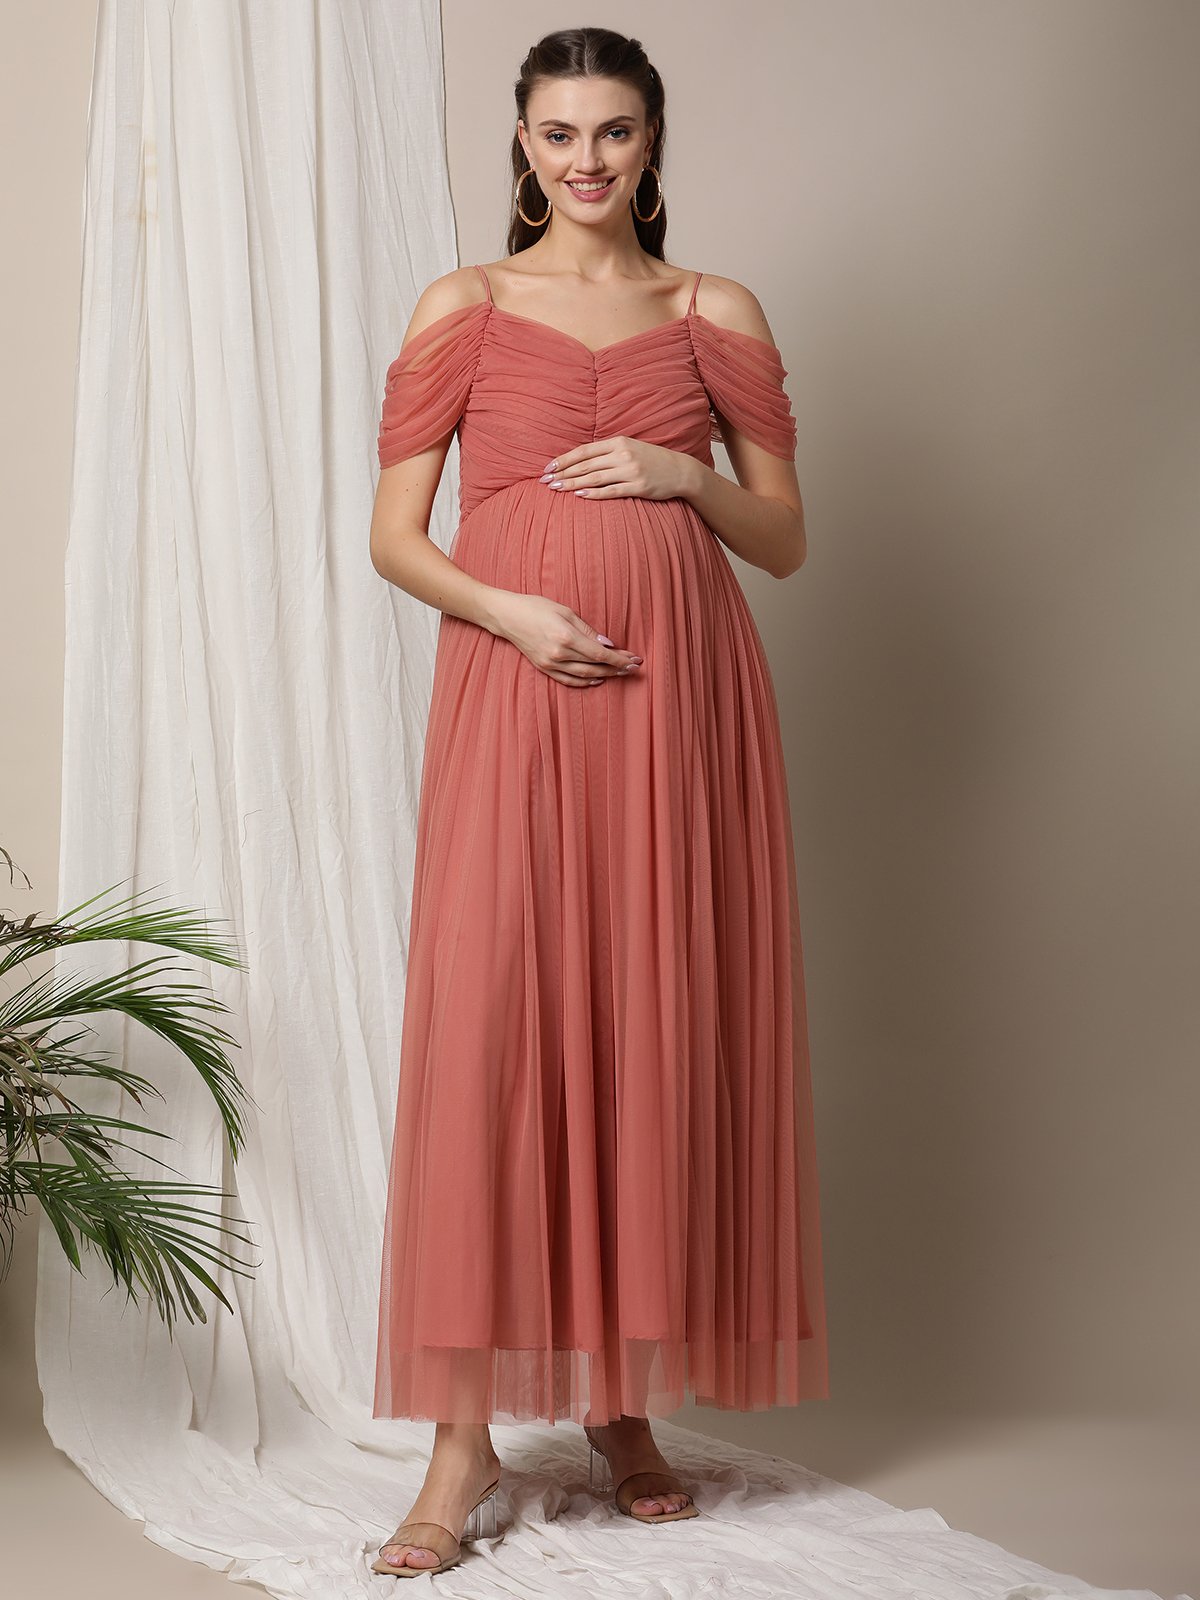 Formal Maternity Dresses | Pregnancy Formal Dresses